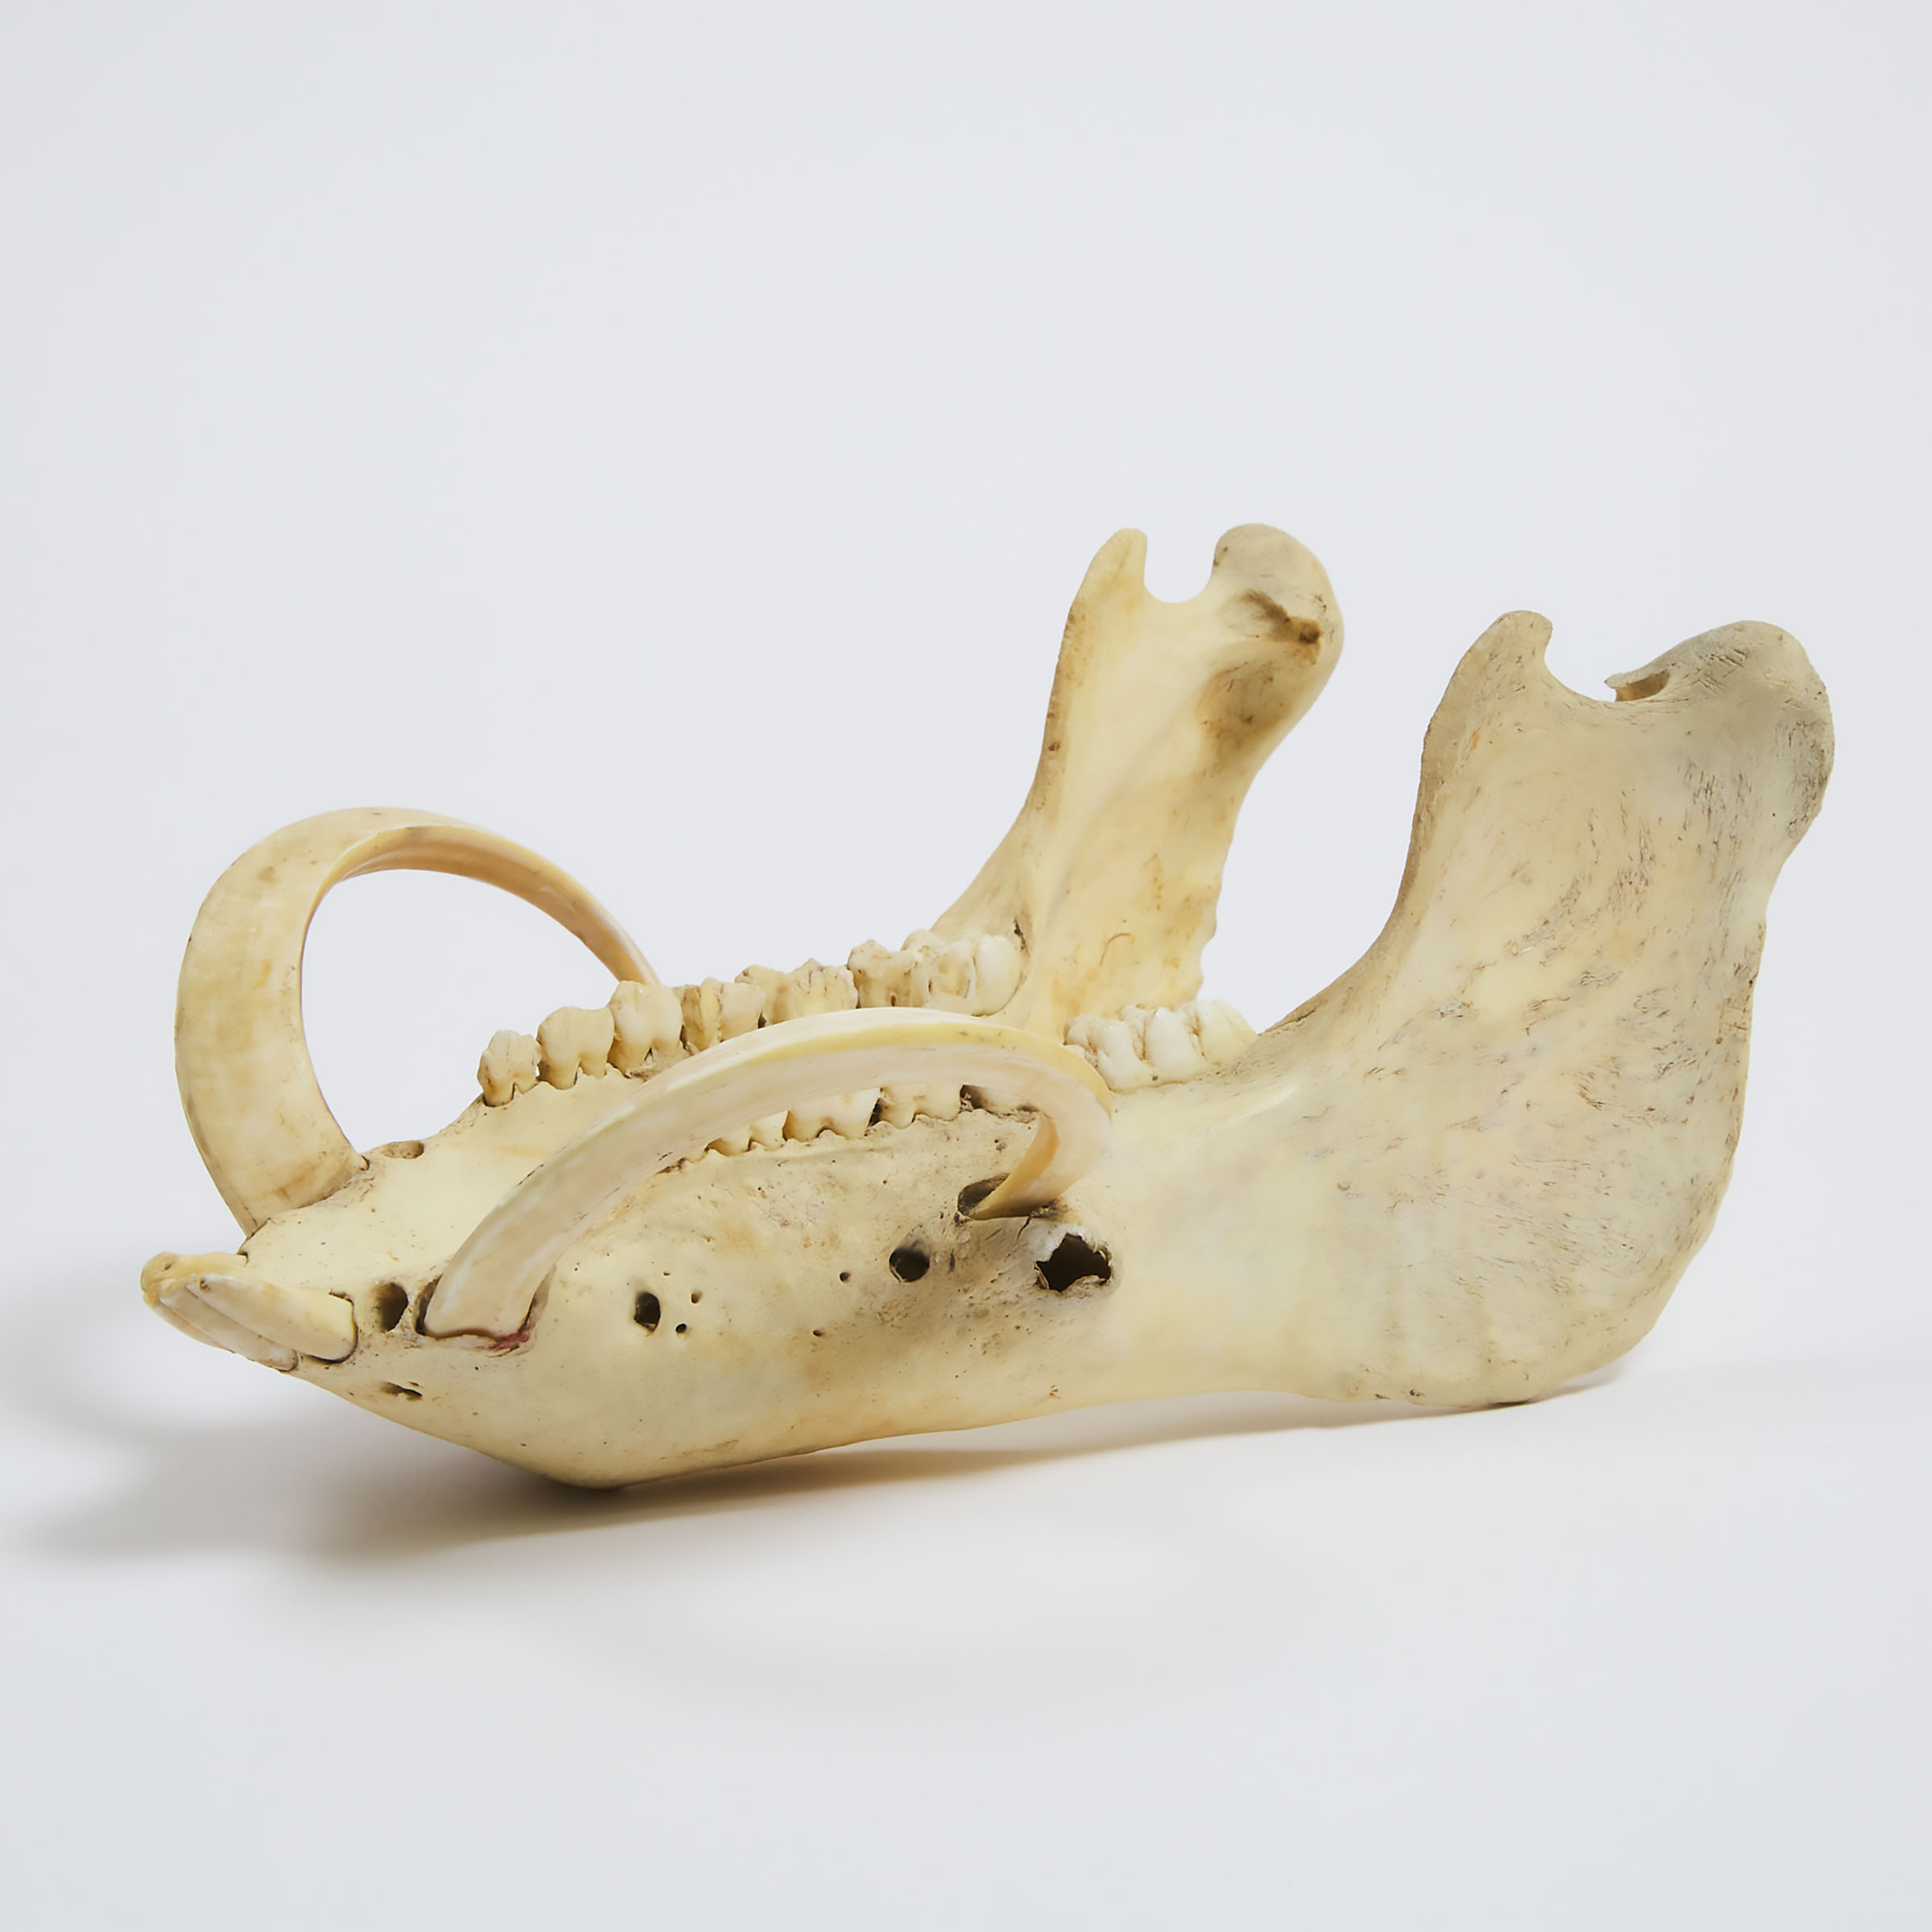 Australian Wild Boar Jawbone with Tusks, early-mid 20th century